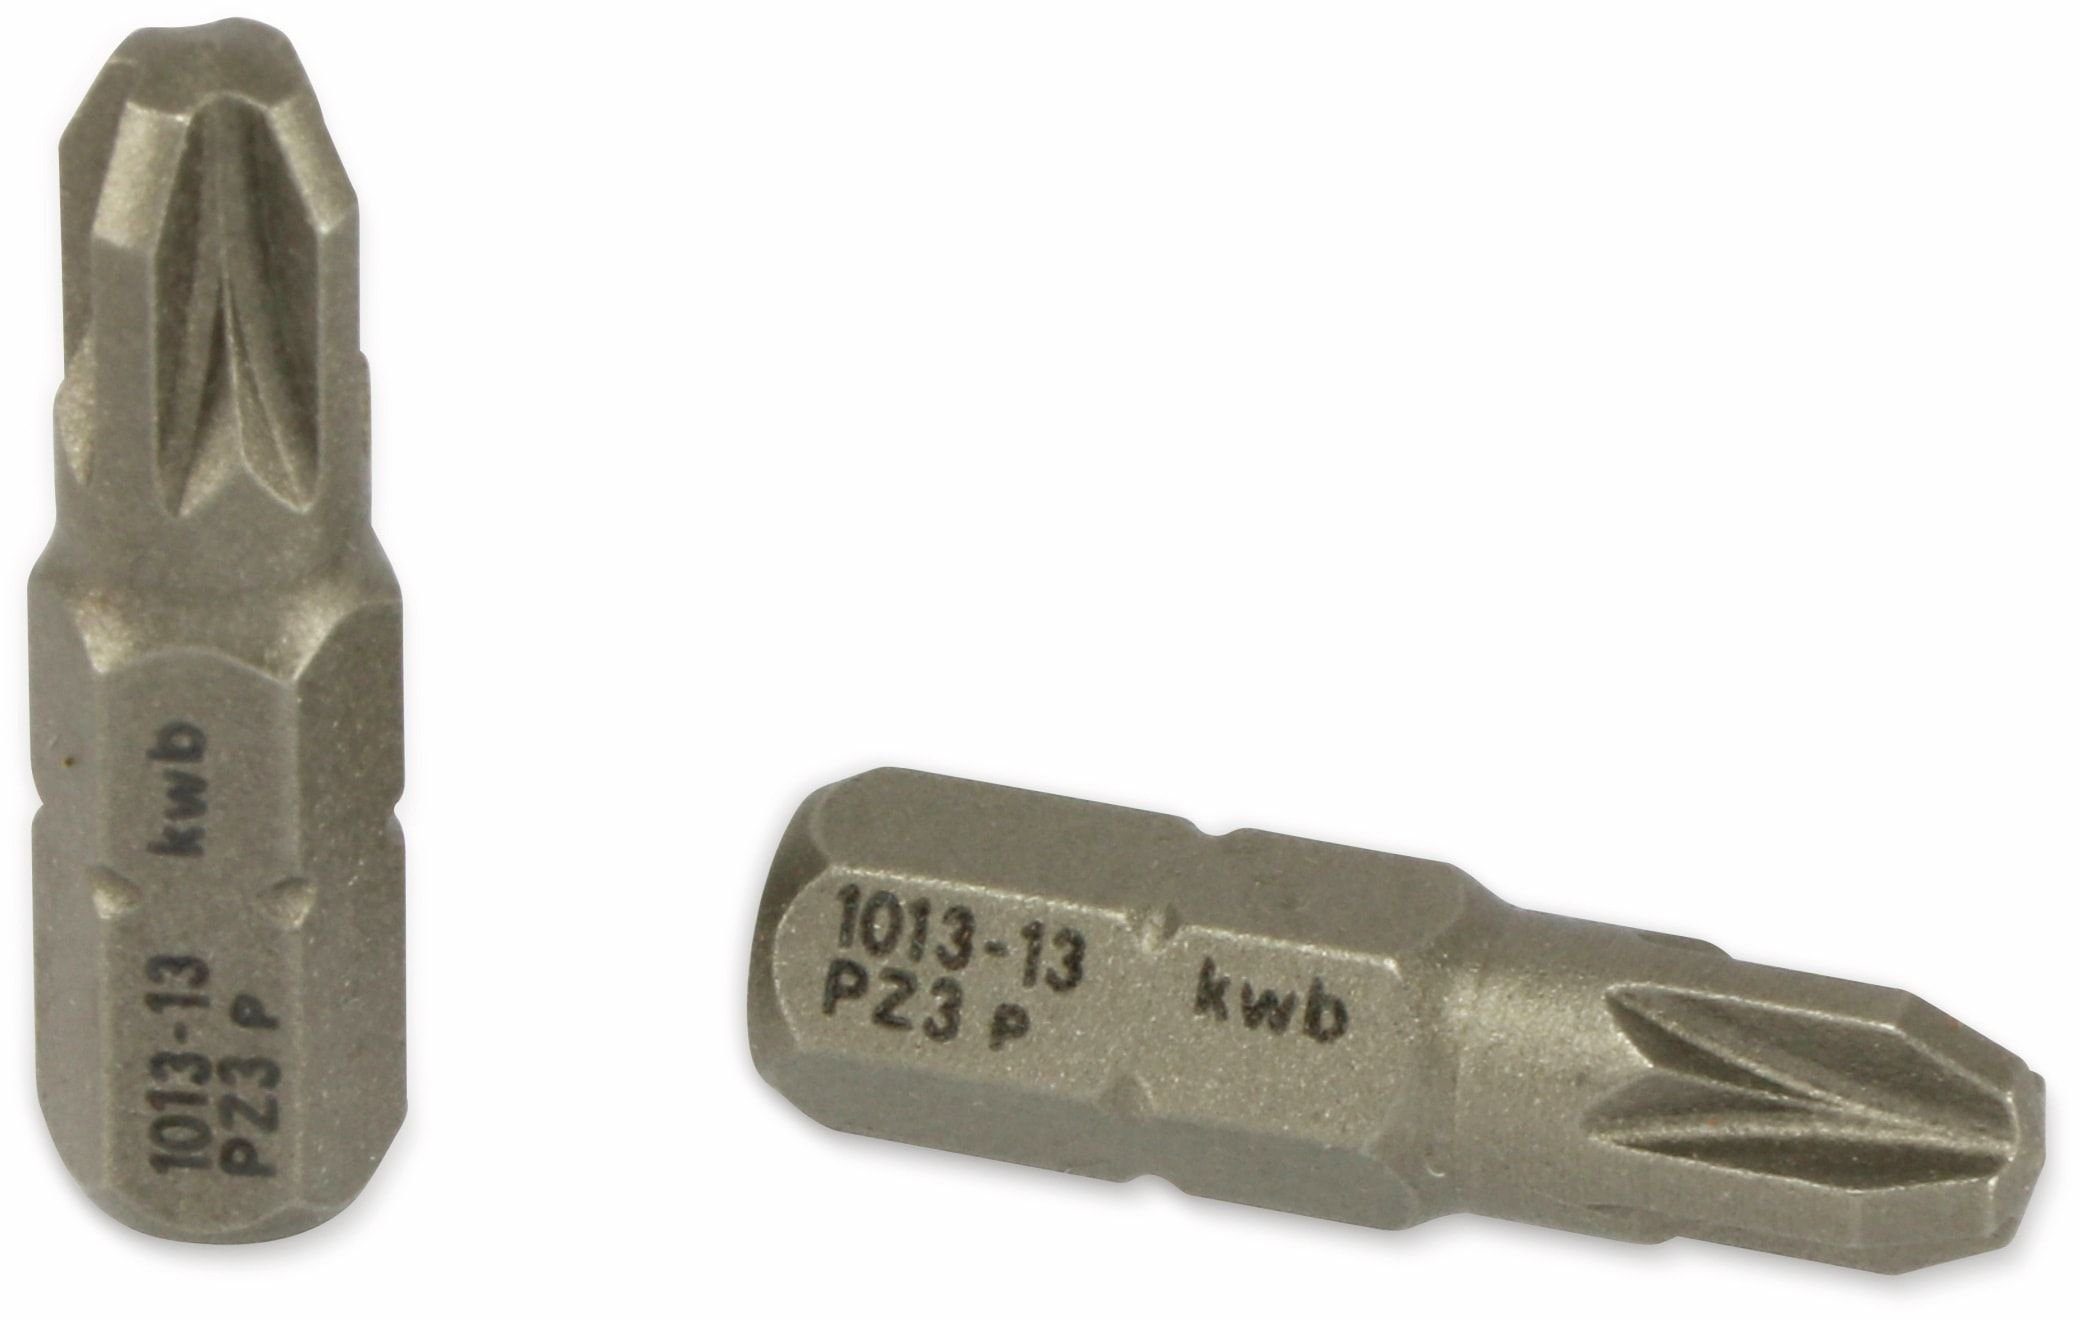 kwb Bohrer- und Bitset KWB Bit-Set, PZ3, Chrom-Vanadium Stahl, 10 Stück